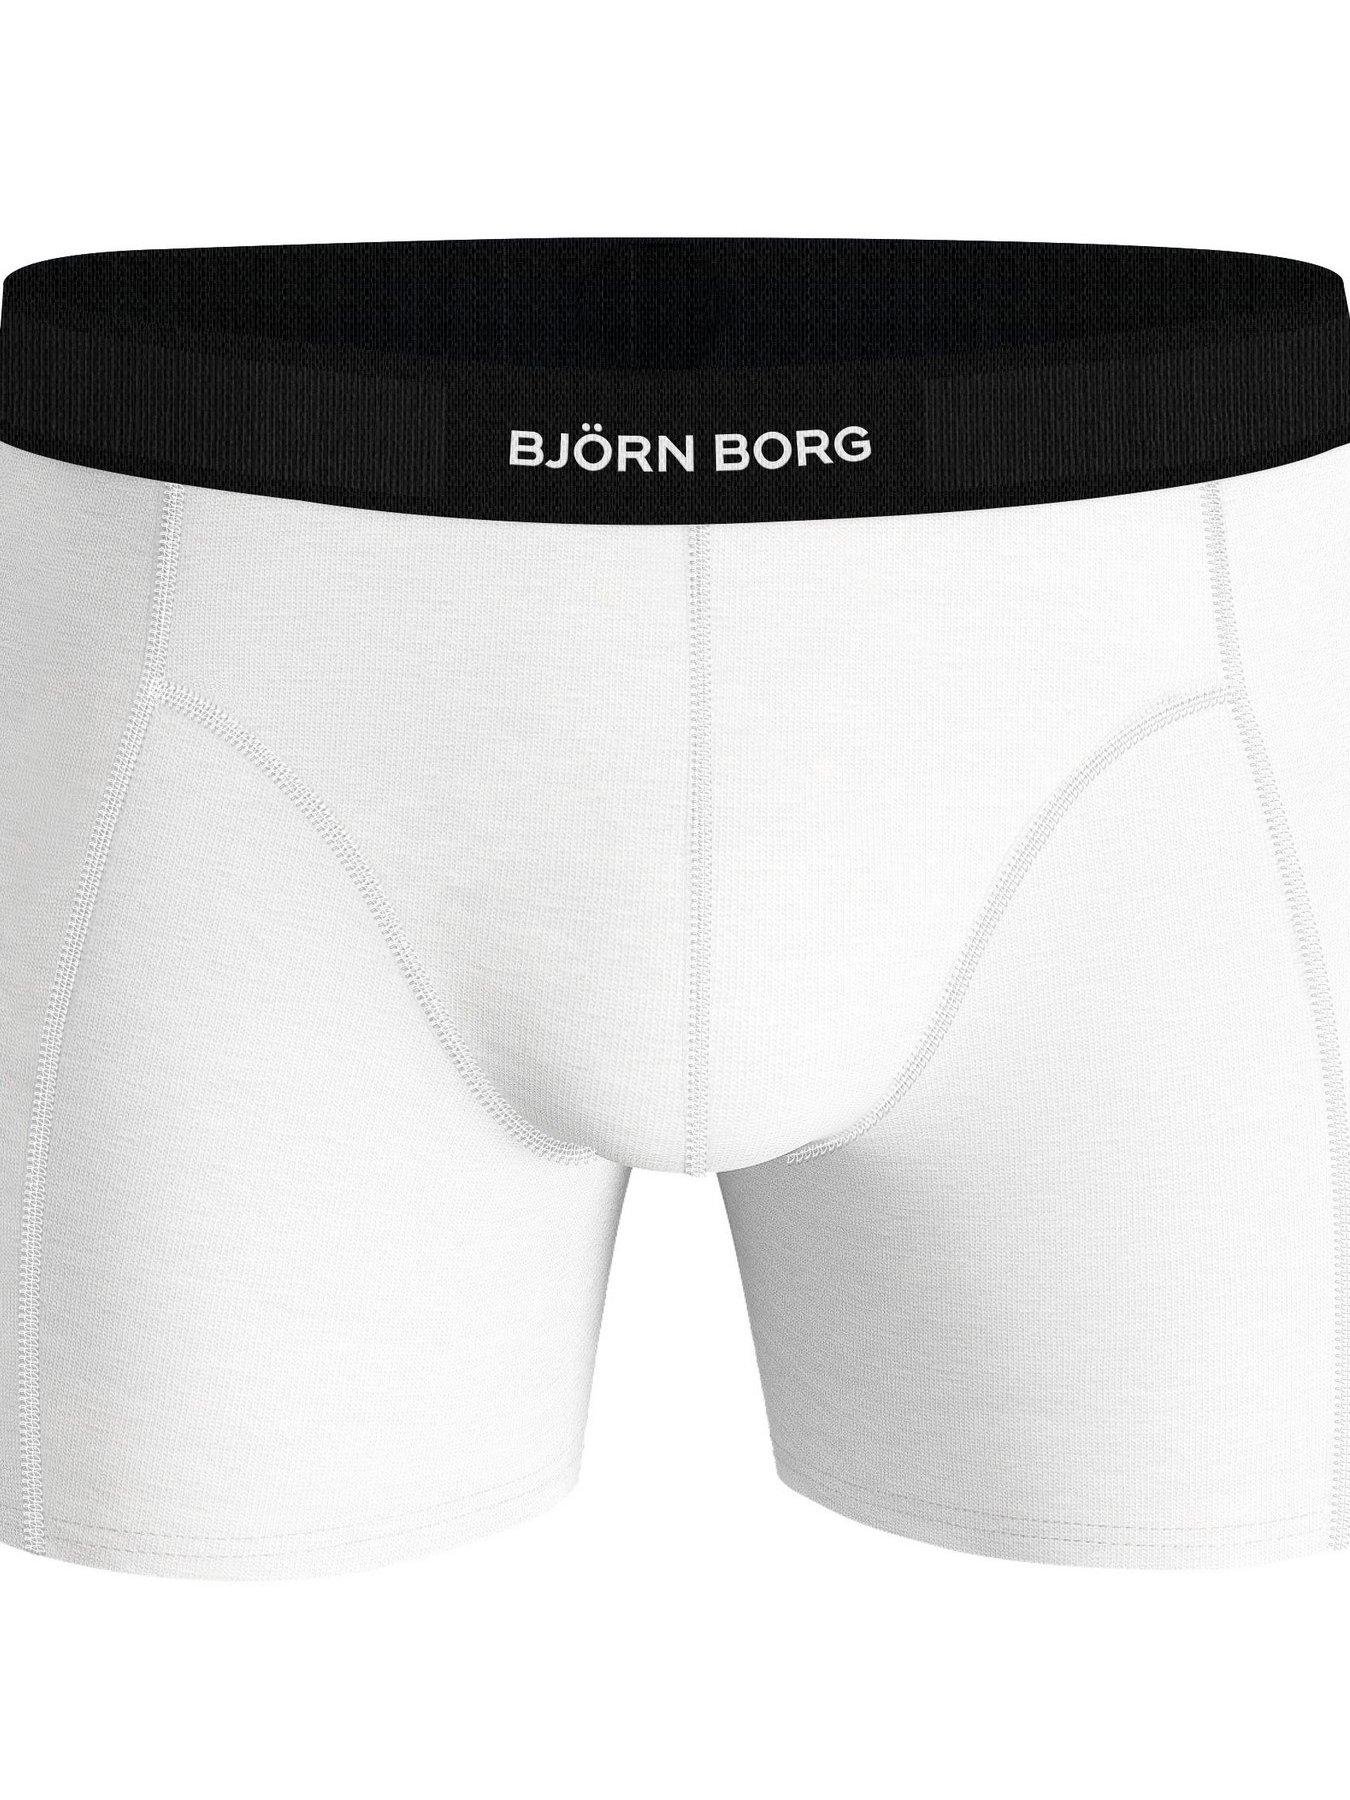 Mens Bjorn Borg Premium Cotton Stretch Boxer 2 Pack